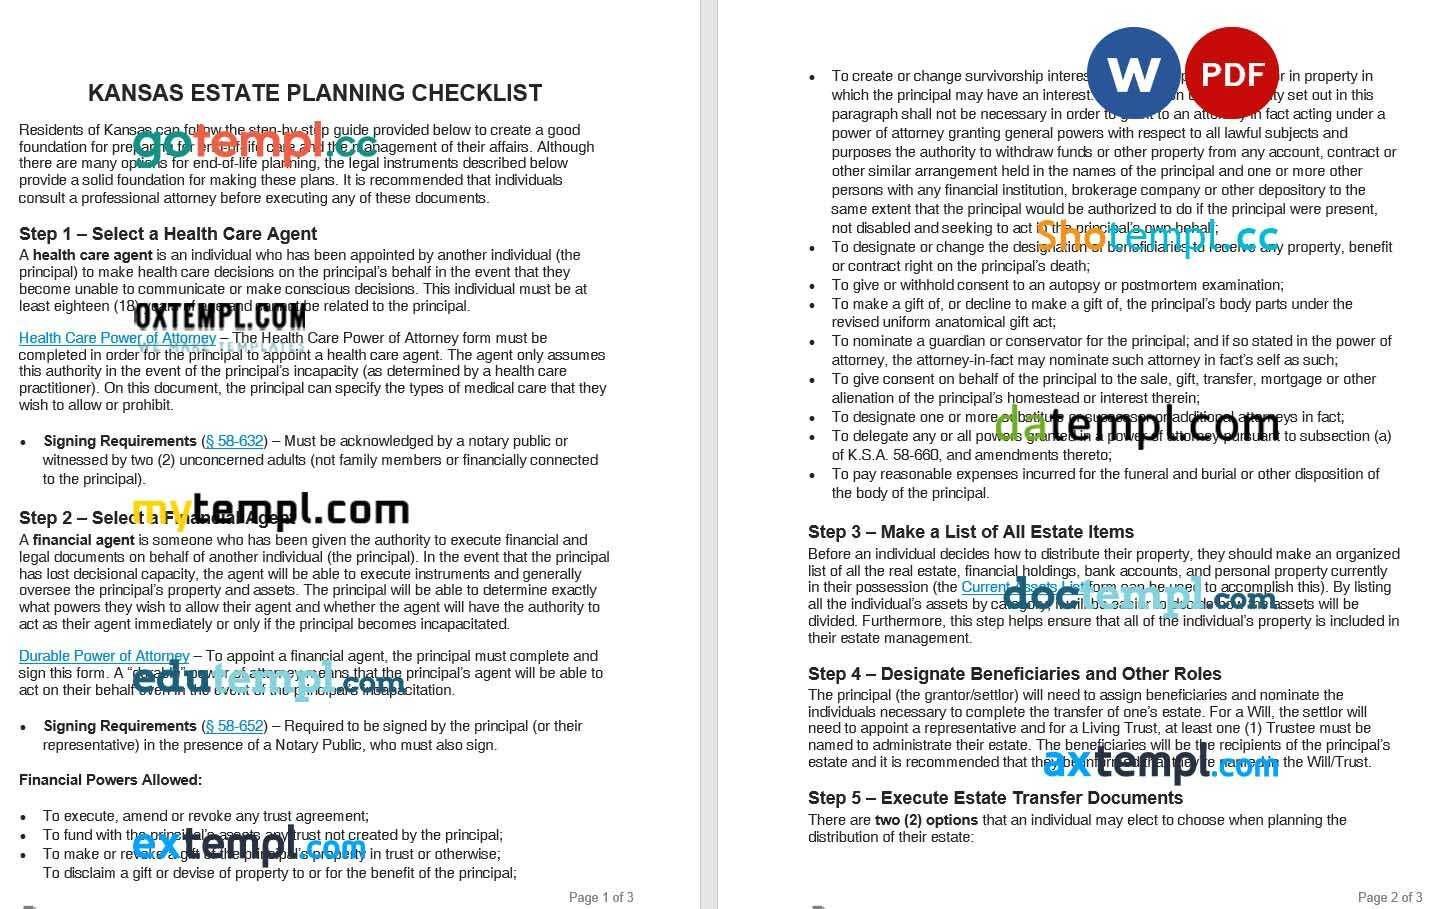 Kansas Estate Planning Checklist example, fully editable